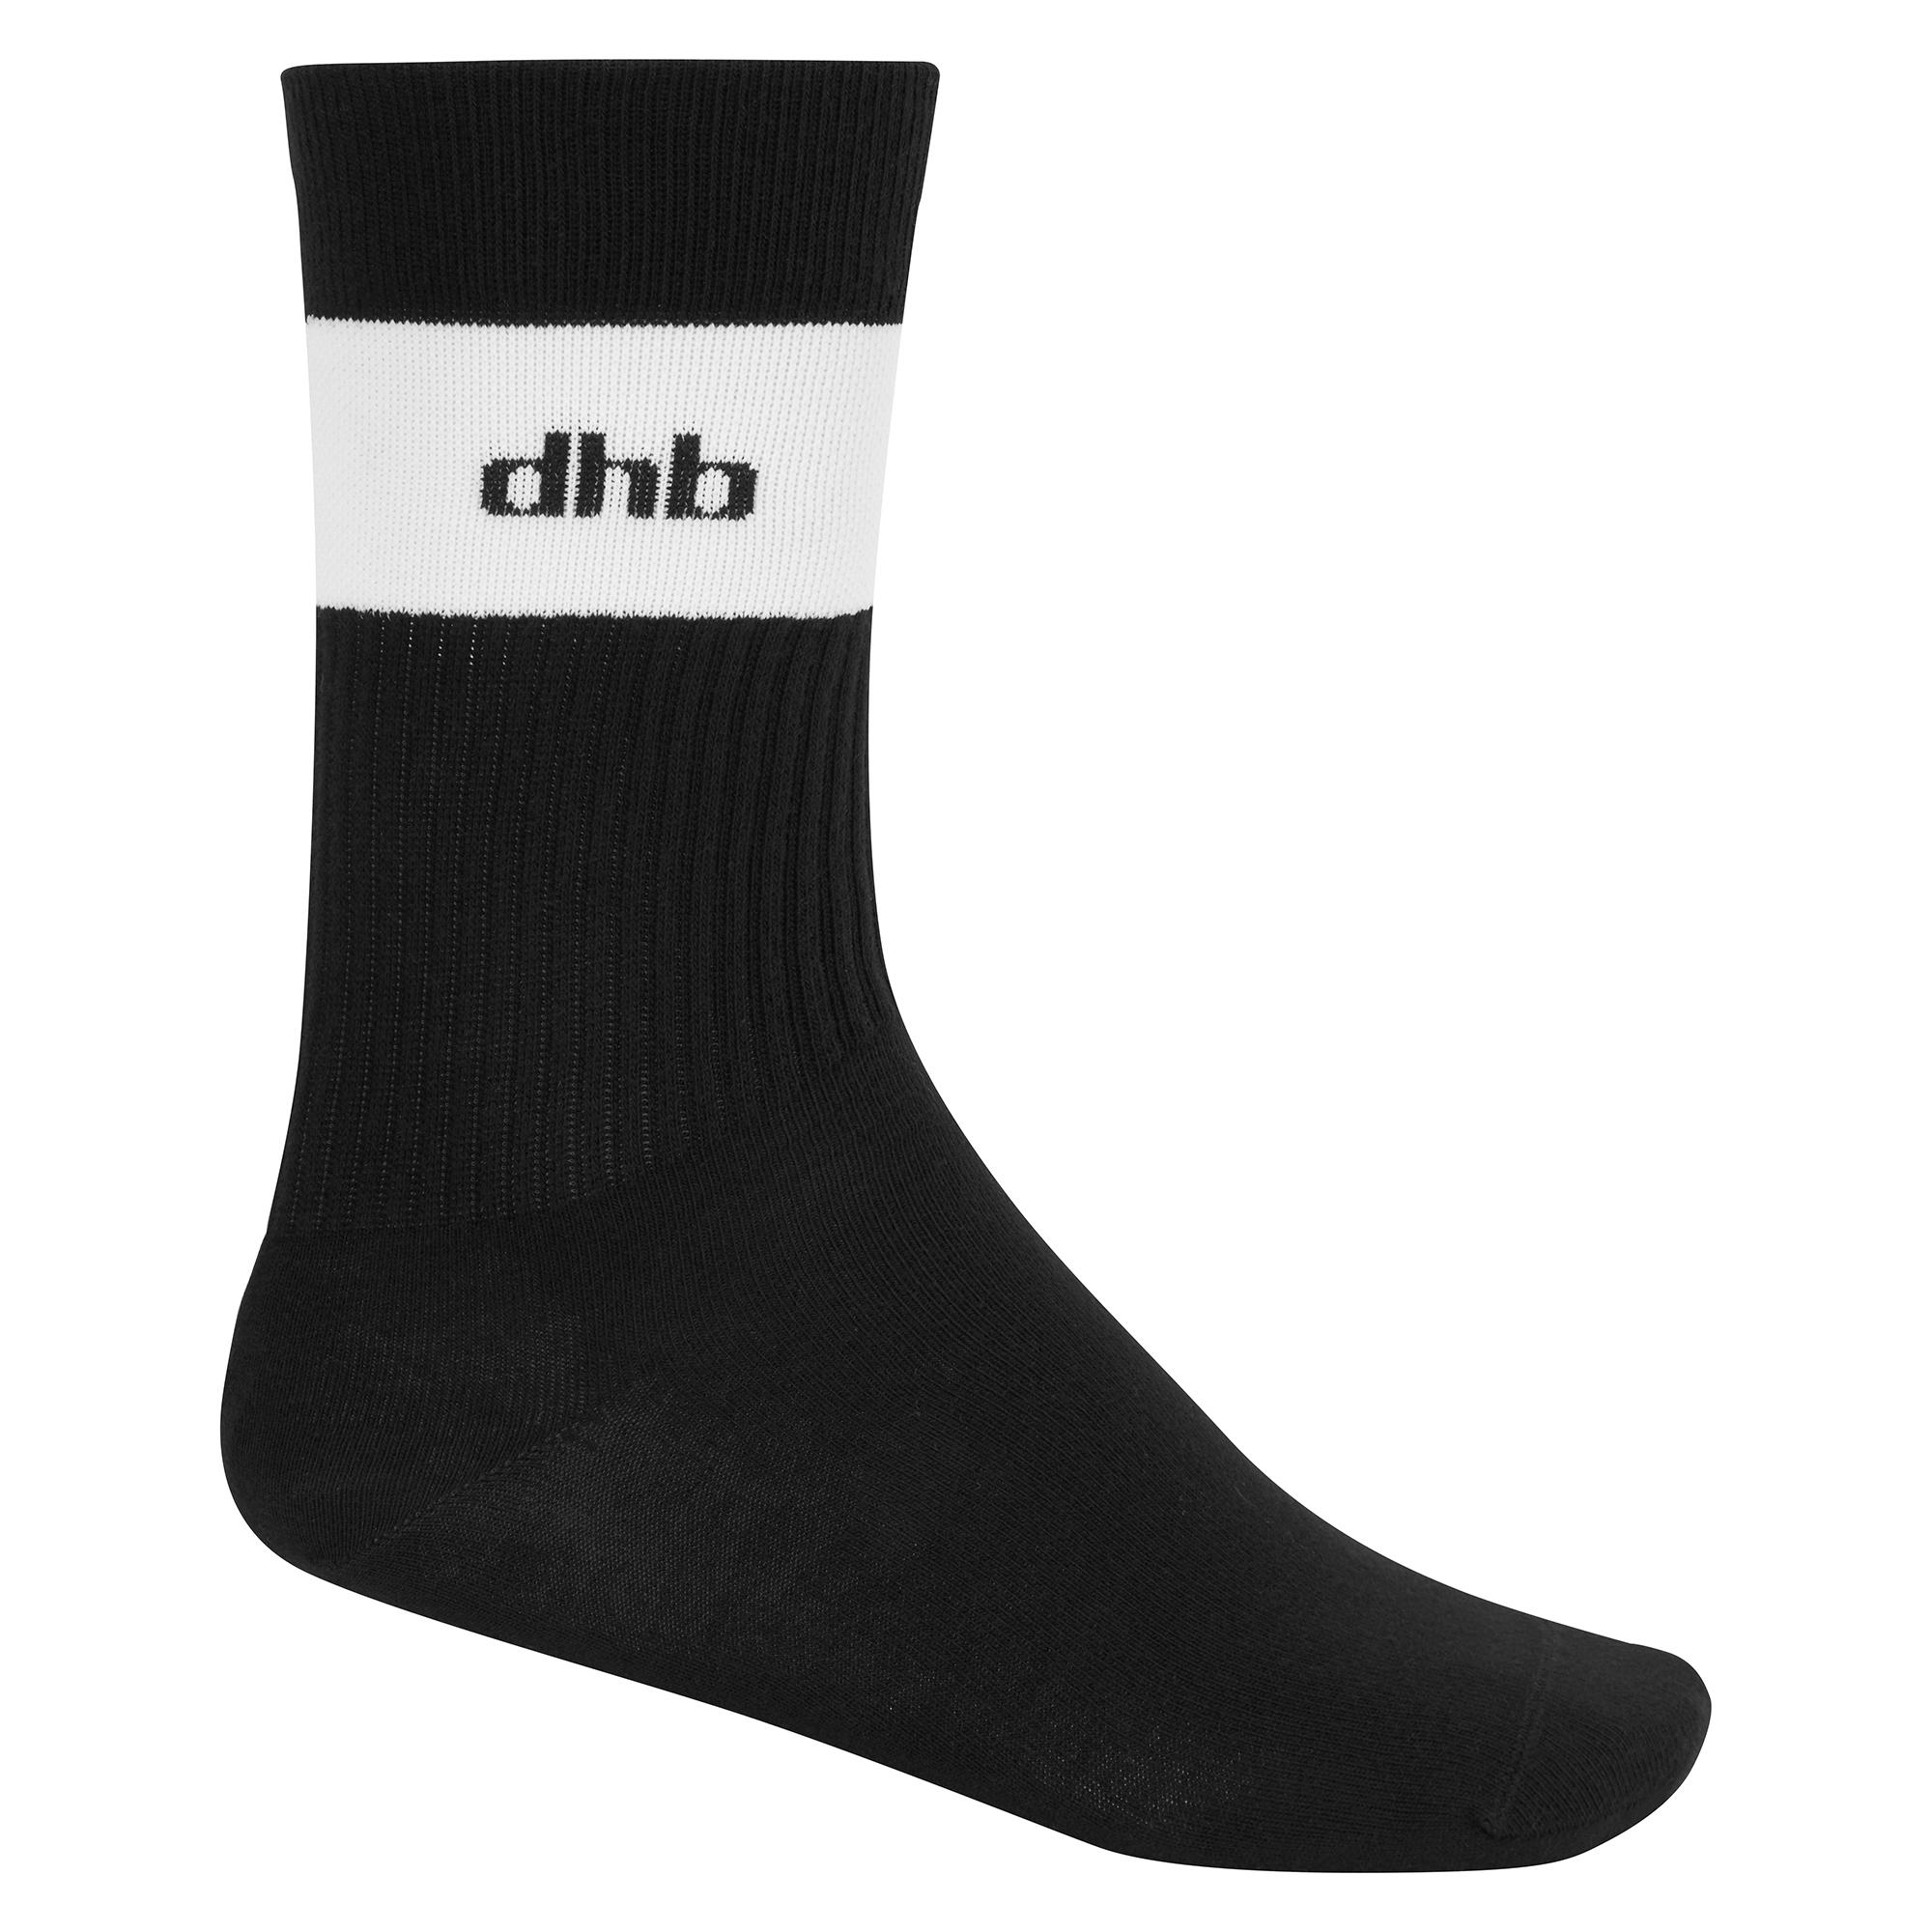 Dhb Training Socks - Black